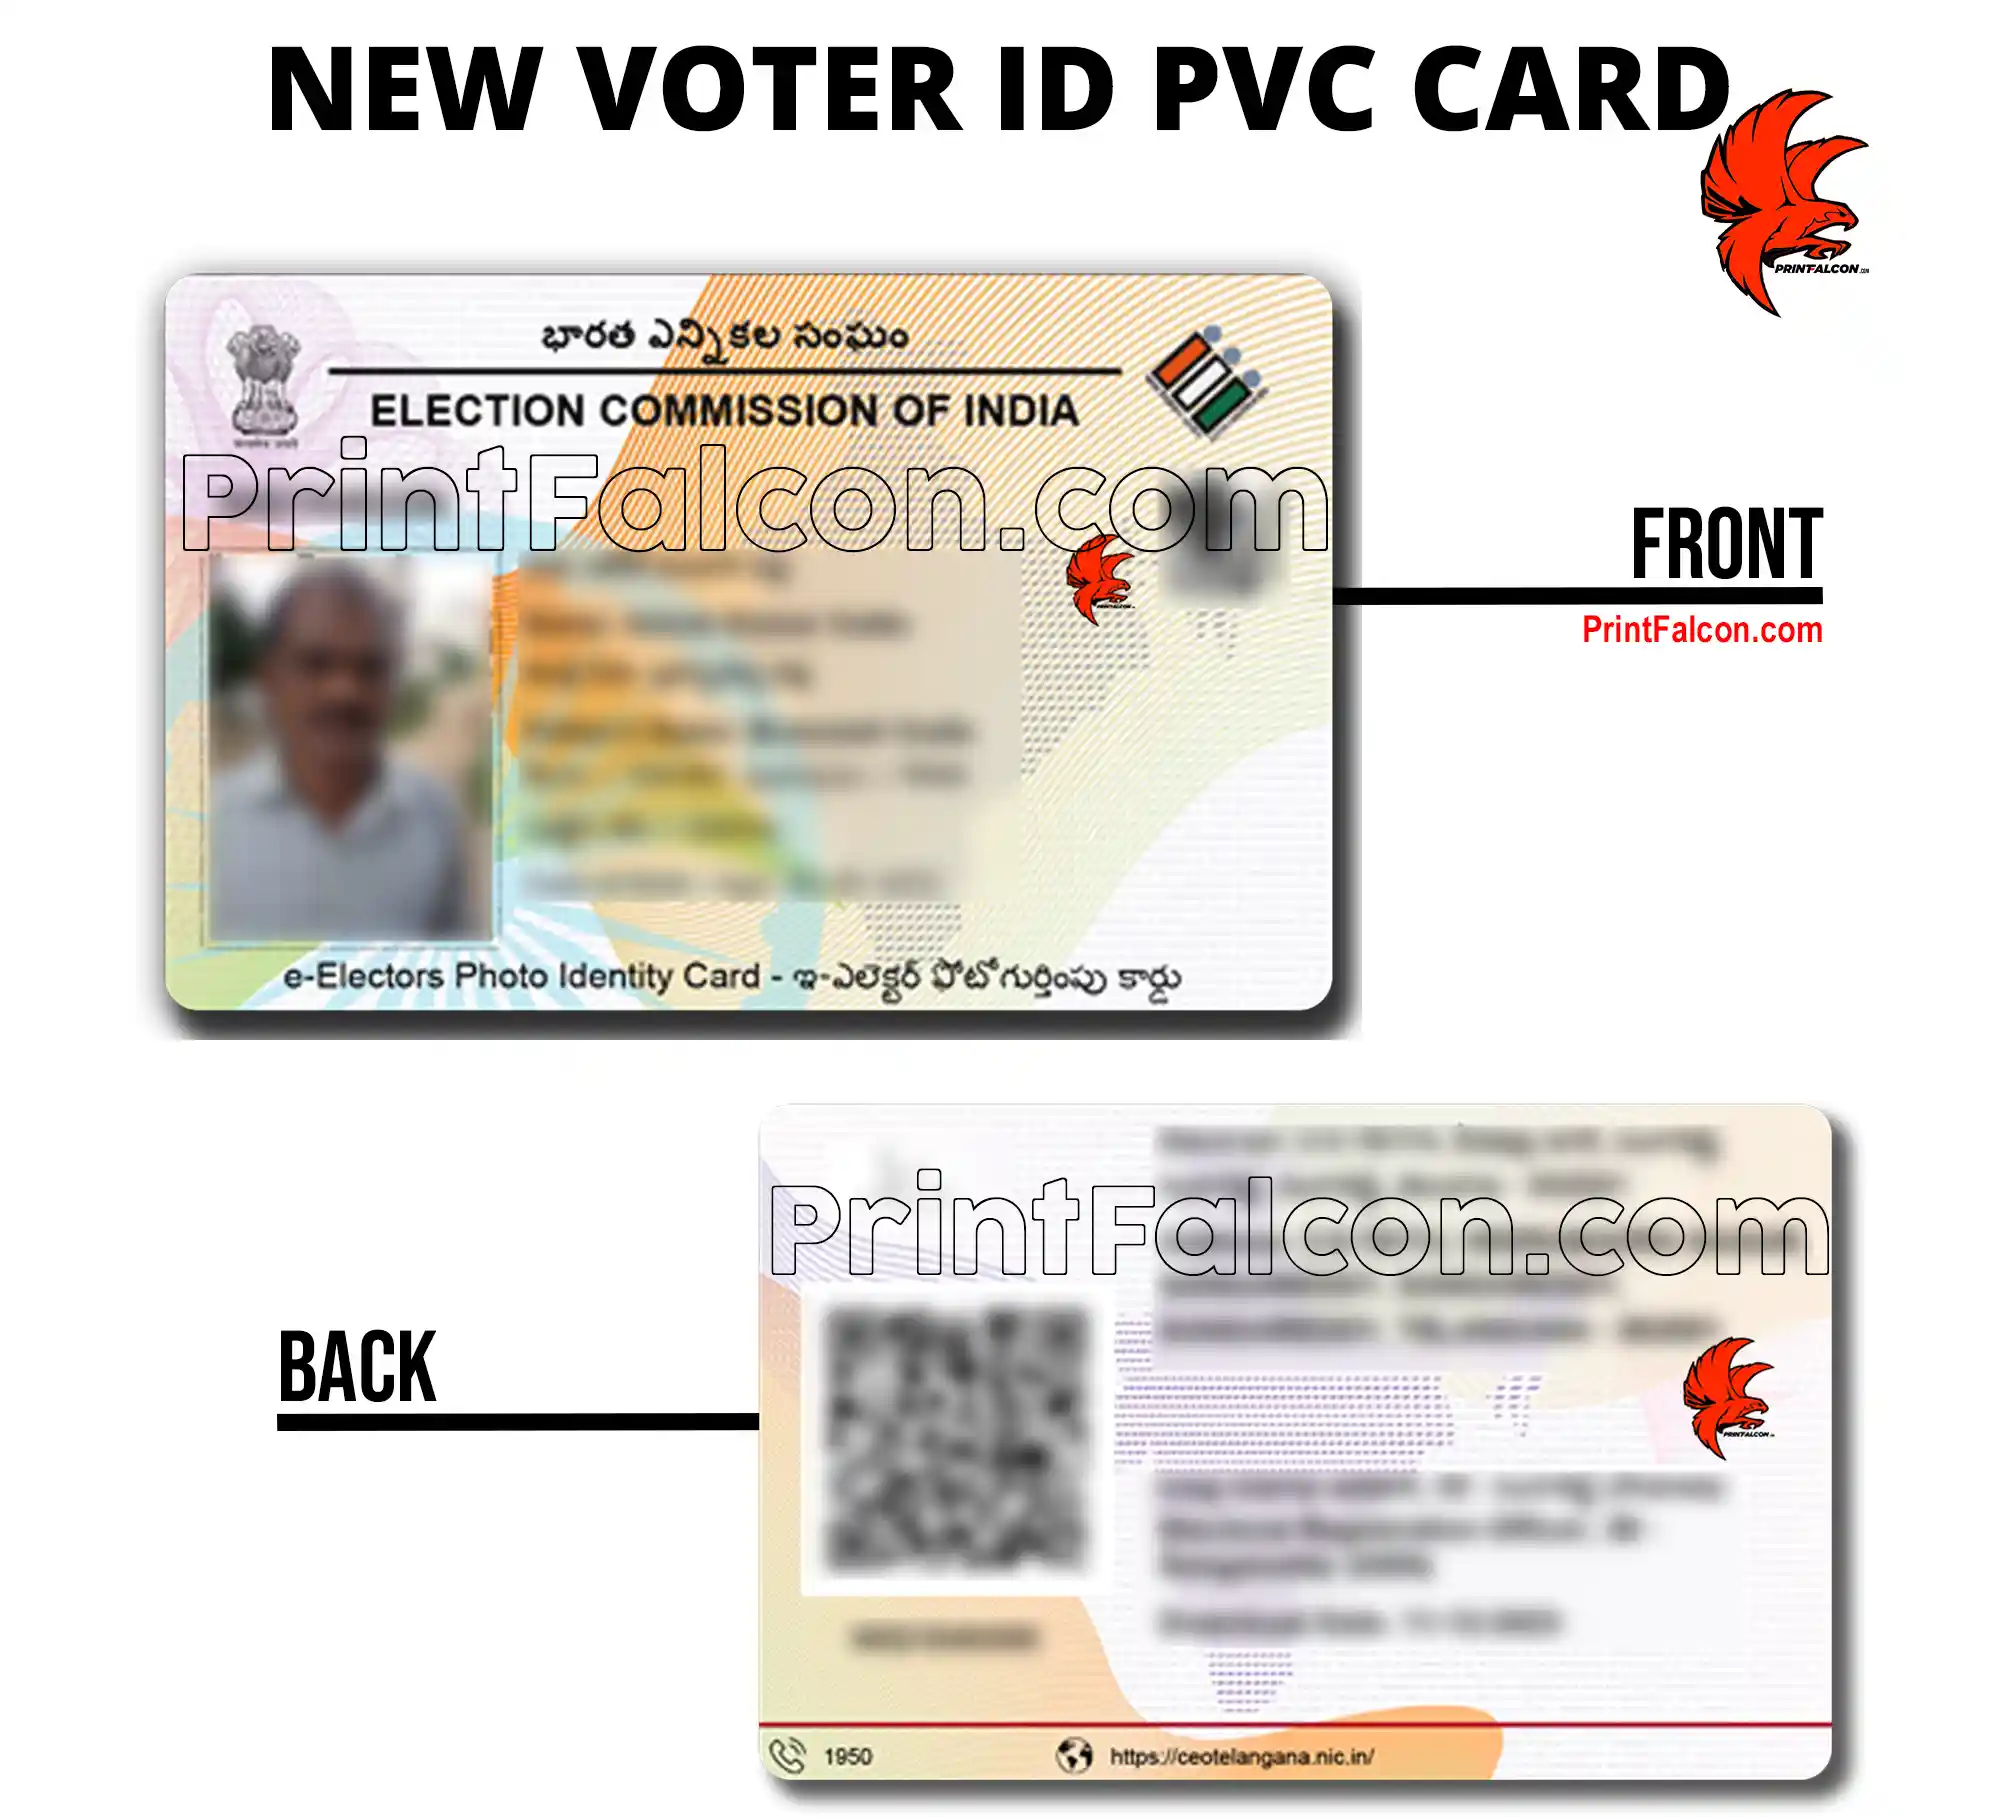 New Voter ID PVC Card - Printfalcon